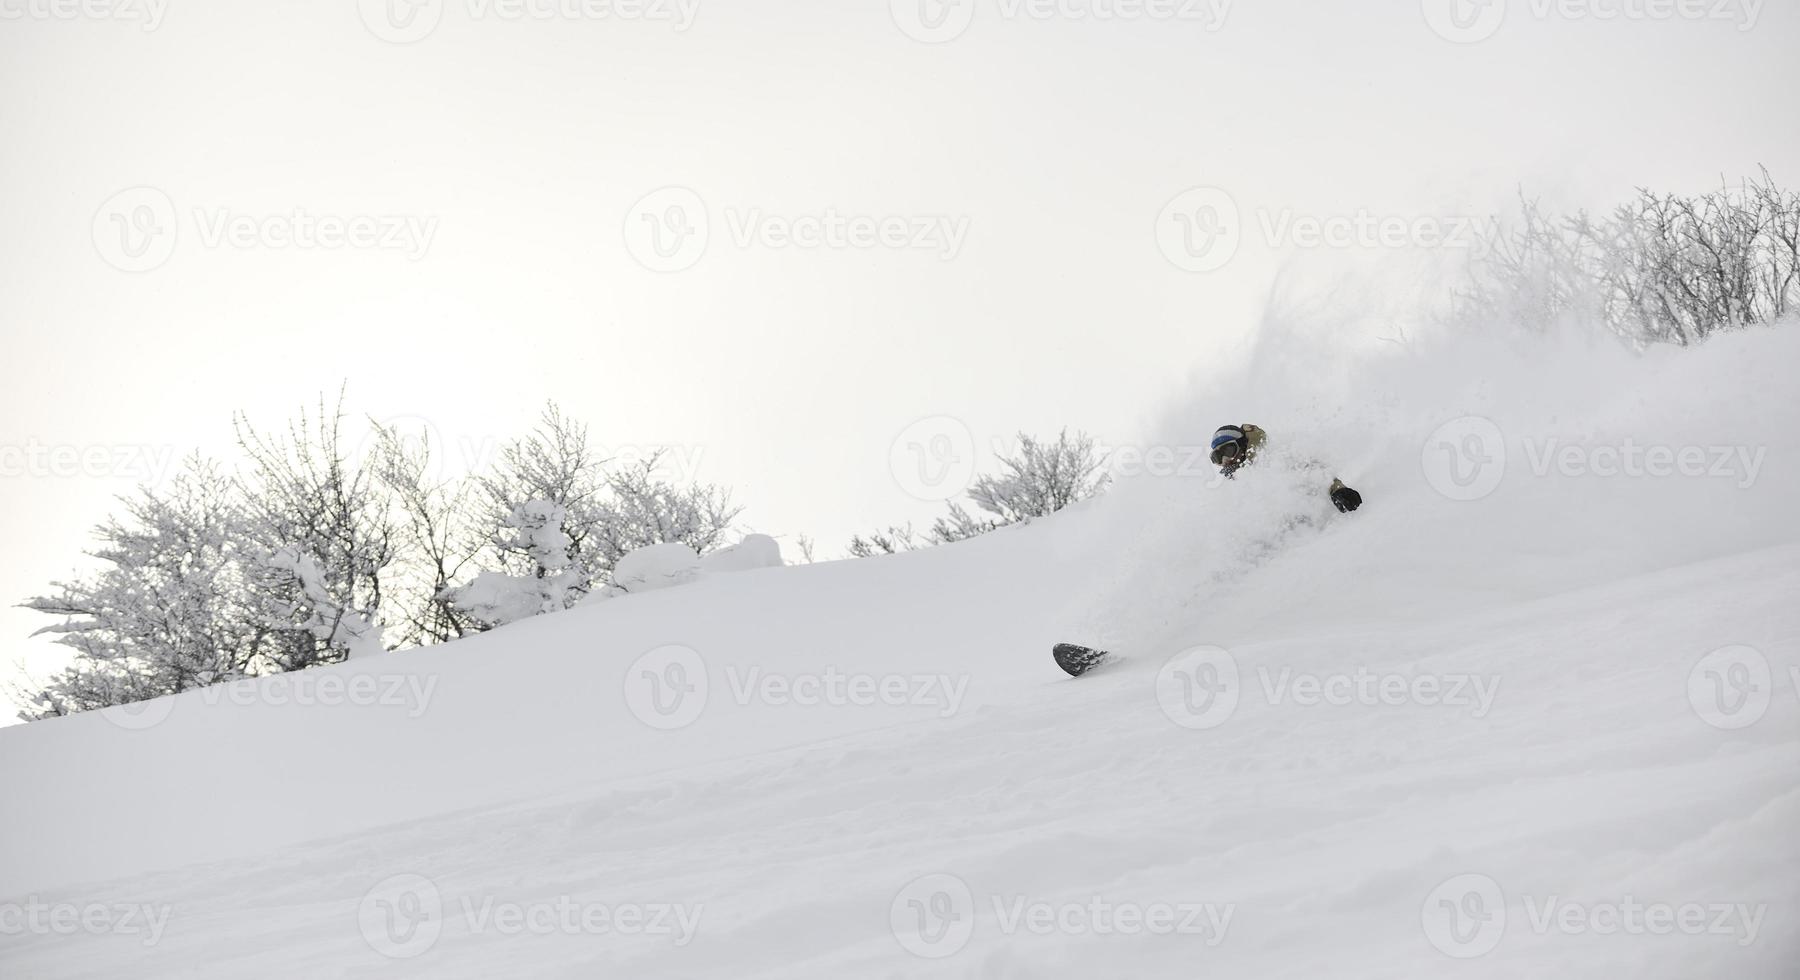 skieurs en montagne photo